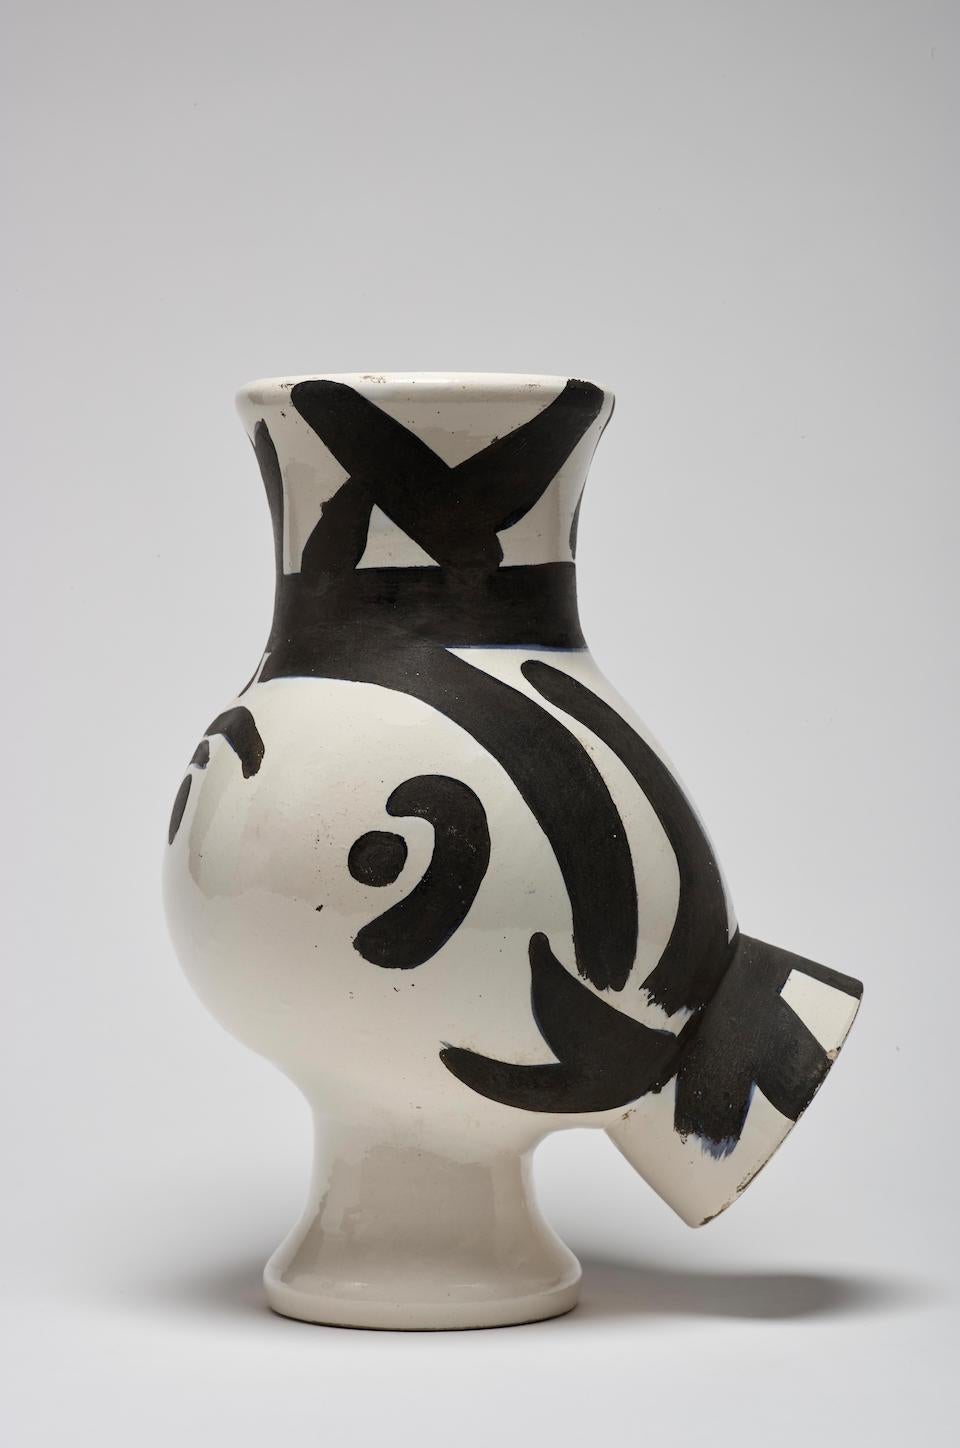 Chouette, Picasso, Pitcher, Design, 1950's, Ceramic, Black and white, Animal - Sculpture by Pablo Picasso